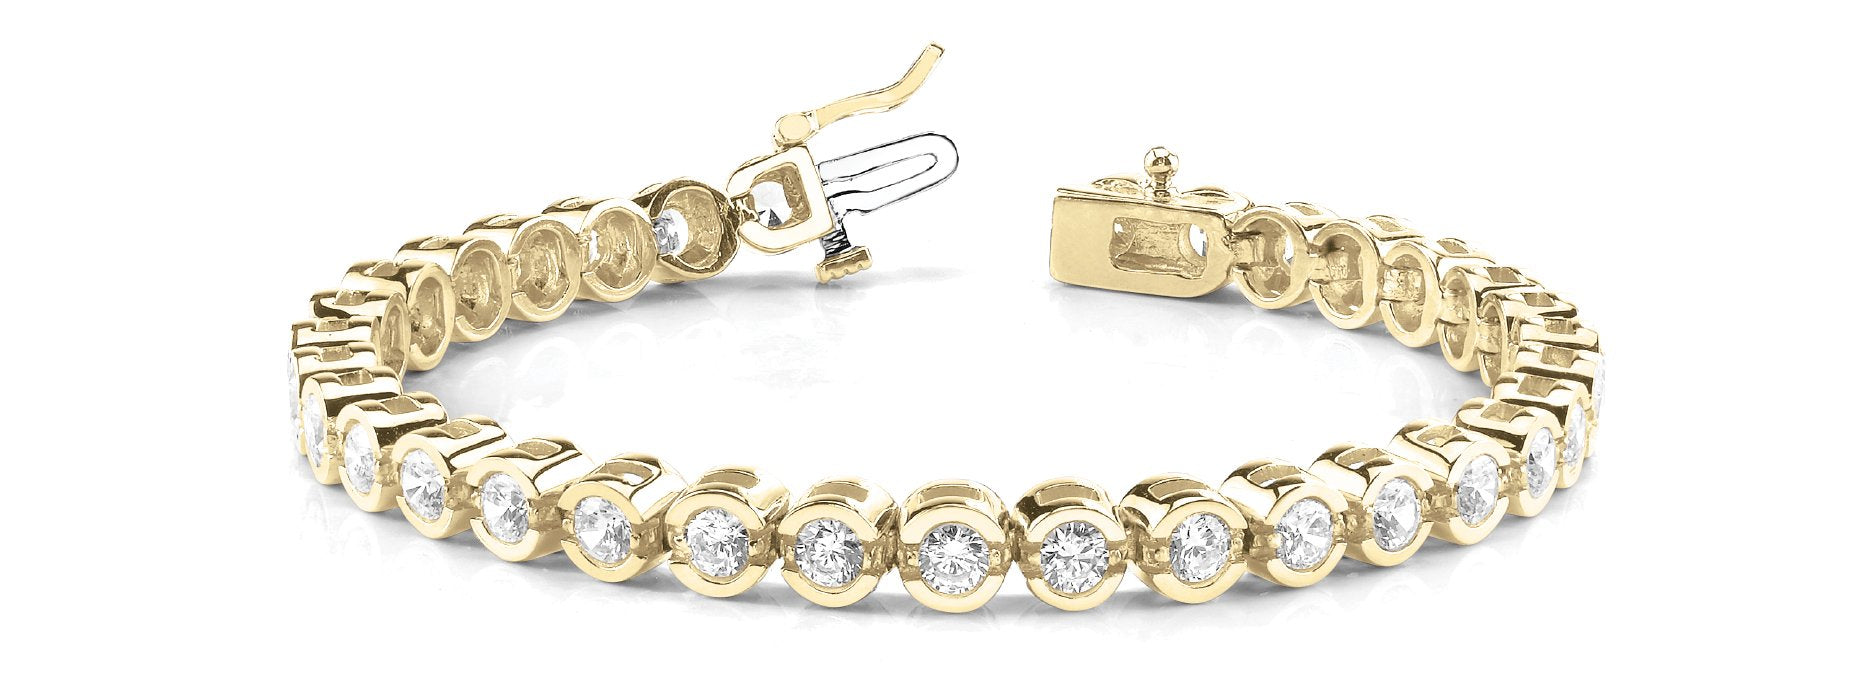 Fancy Diamond Bracelet Ladies 5.89ct tw - 14kt Yellow Gold